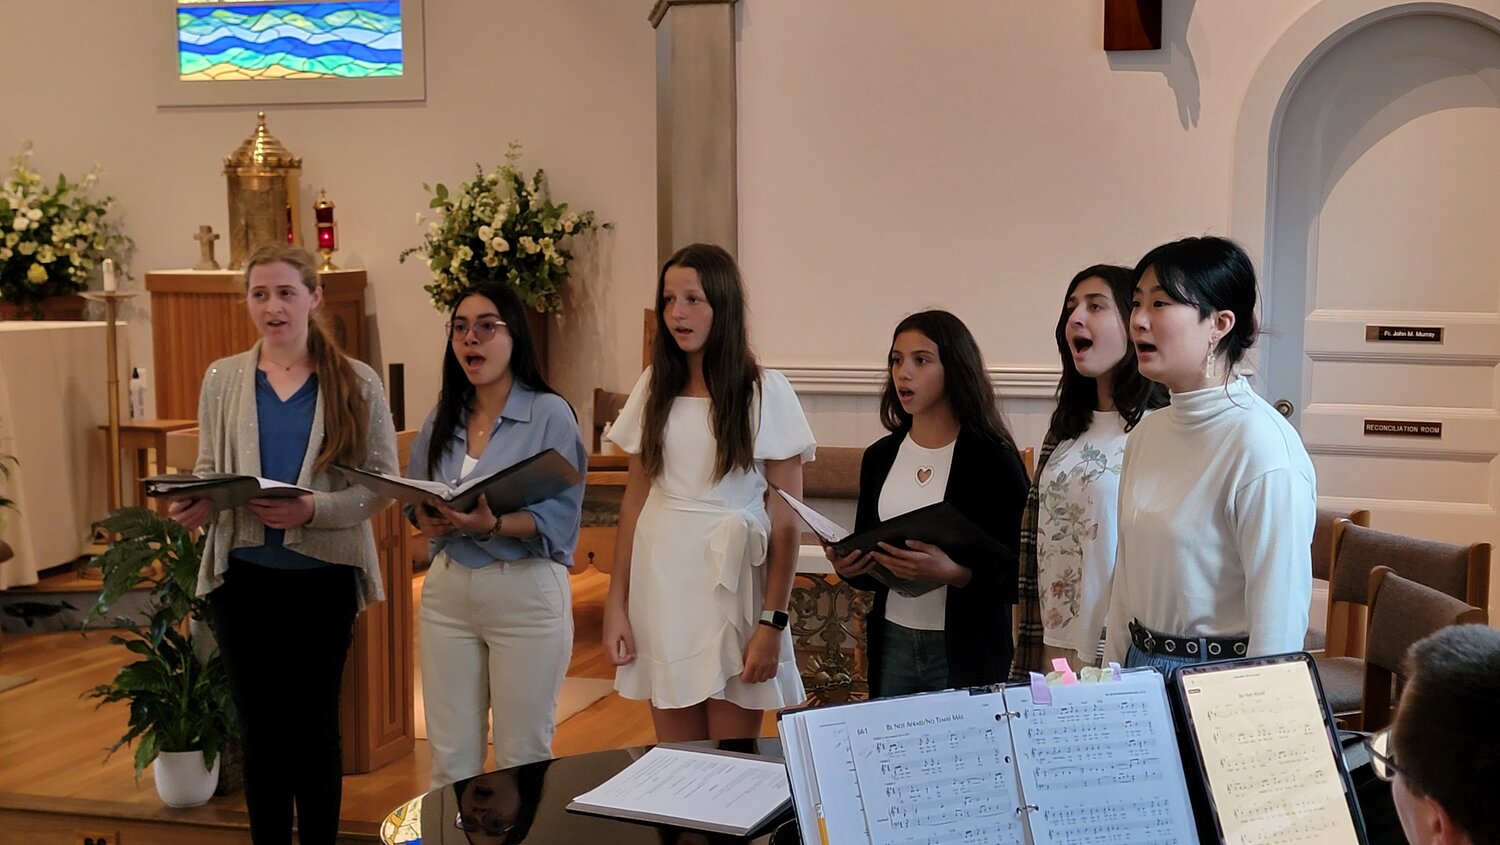 From left, Maria Frable, Adriana Salazar, Liepa Skehel, Fiorella Guiterrez, Maya Indrakanti and Meilynn Teng at St. Mary’s Catholic Church